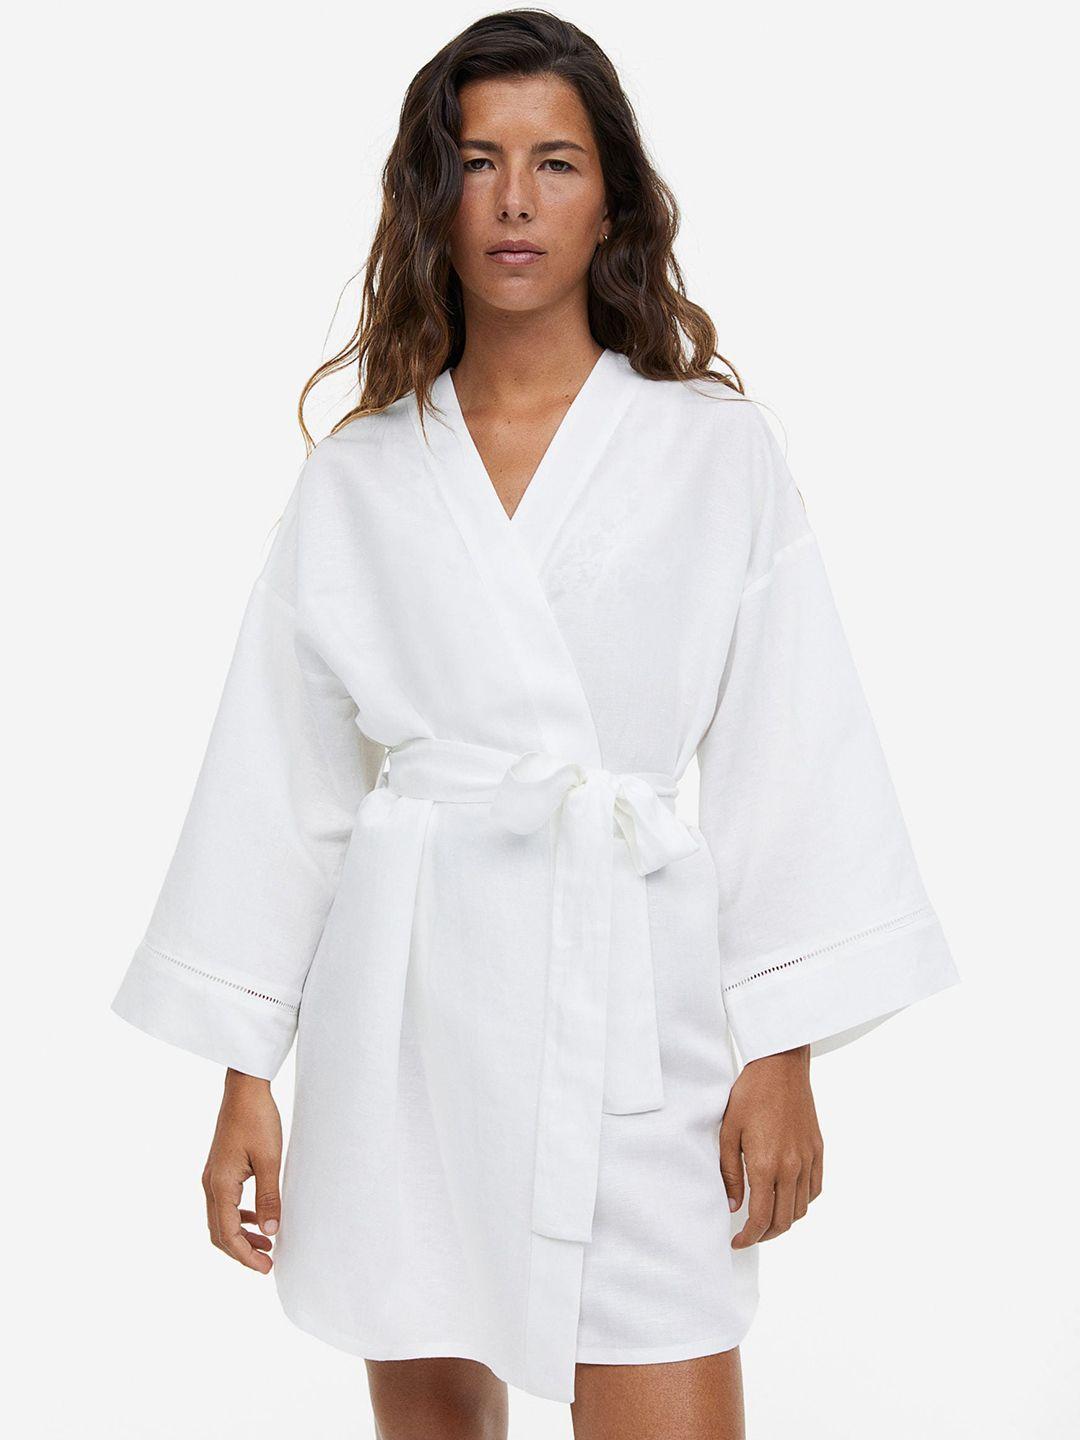 h&m women dressing gown robe